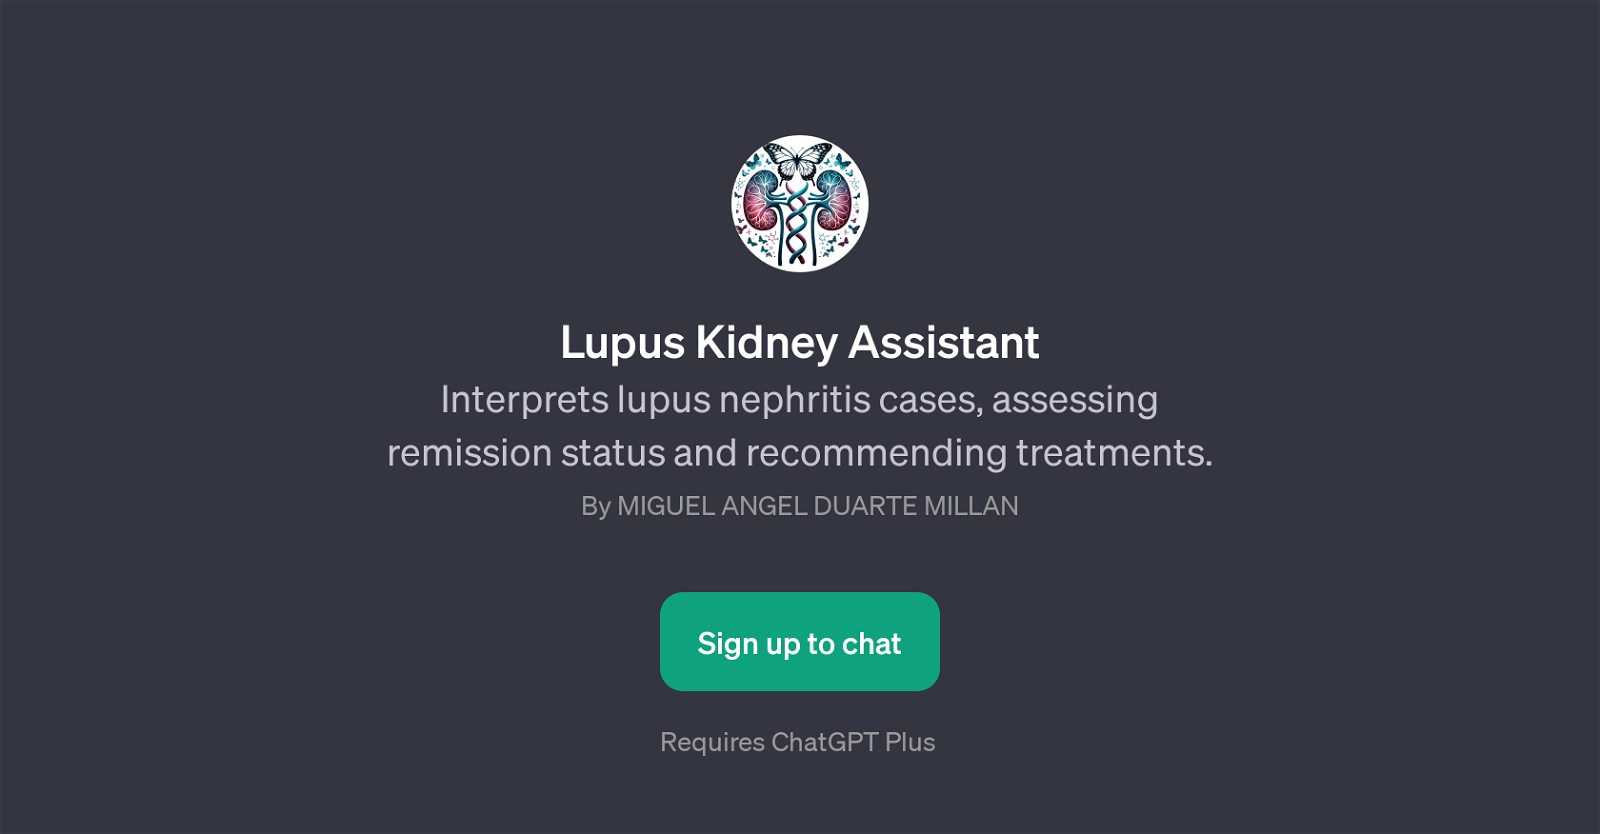 Lupus Kidney Assistant website